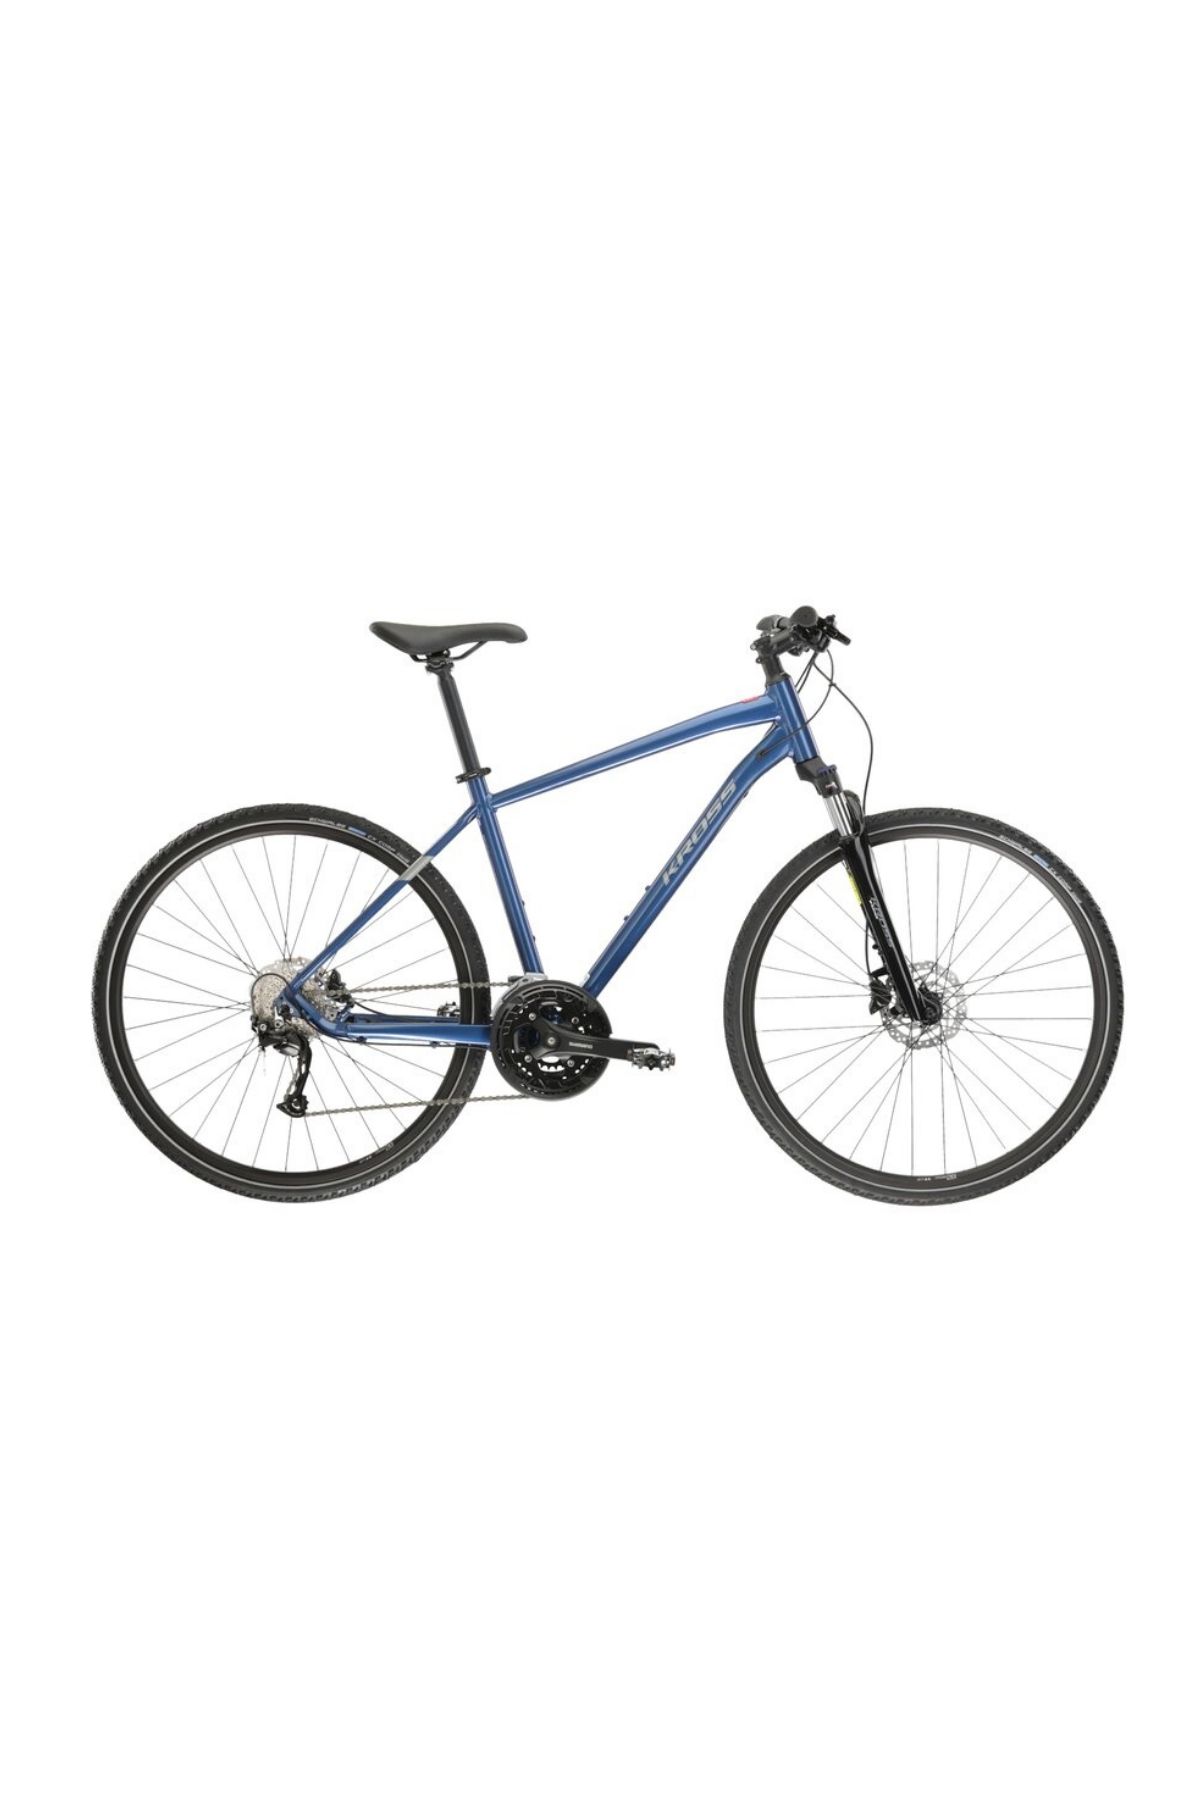 KROSS Evado 6 - 28 Jant 21'' L Kadro Hibrit Bisiklet - Mavi Gümüş